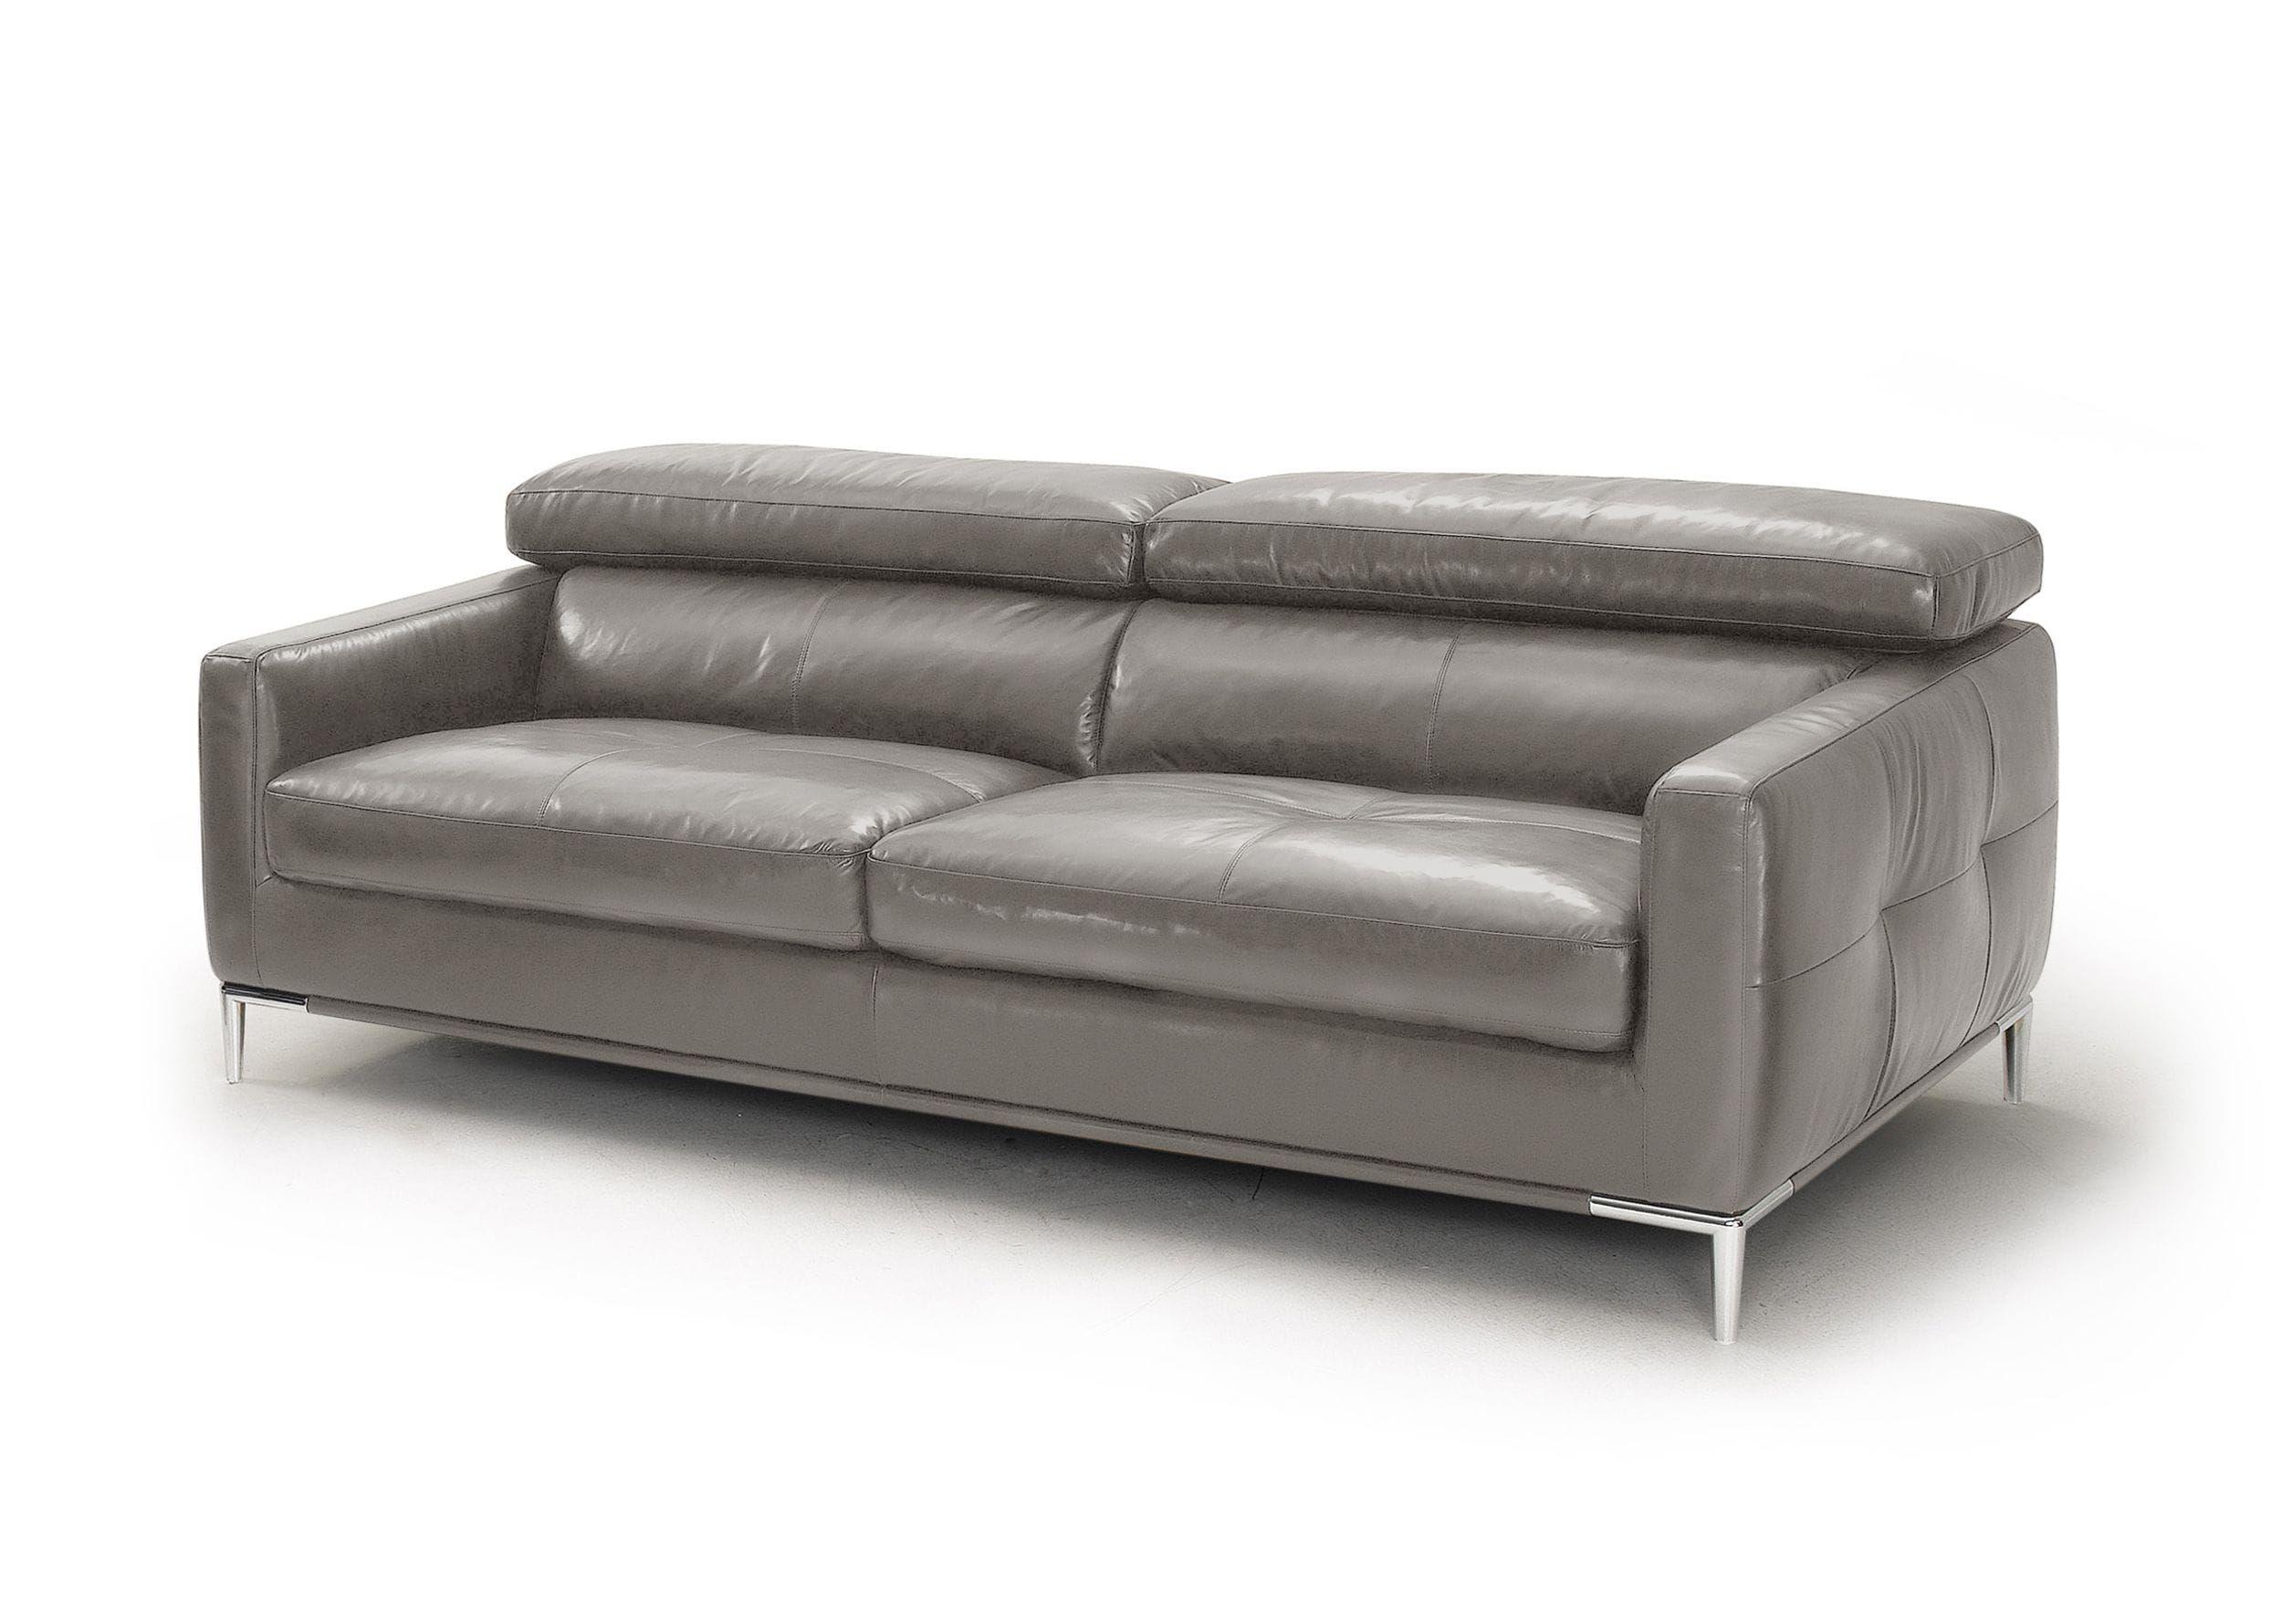 Contemporary, Modern Sofa VGKK1281X-DKGRY-S VGKK1281X-DKGRY-S in Dark Grey Leather